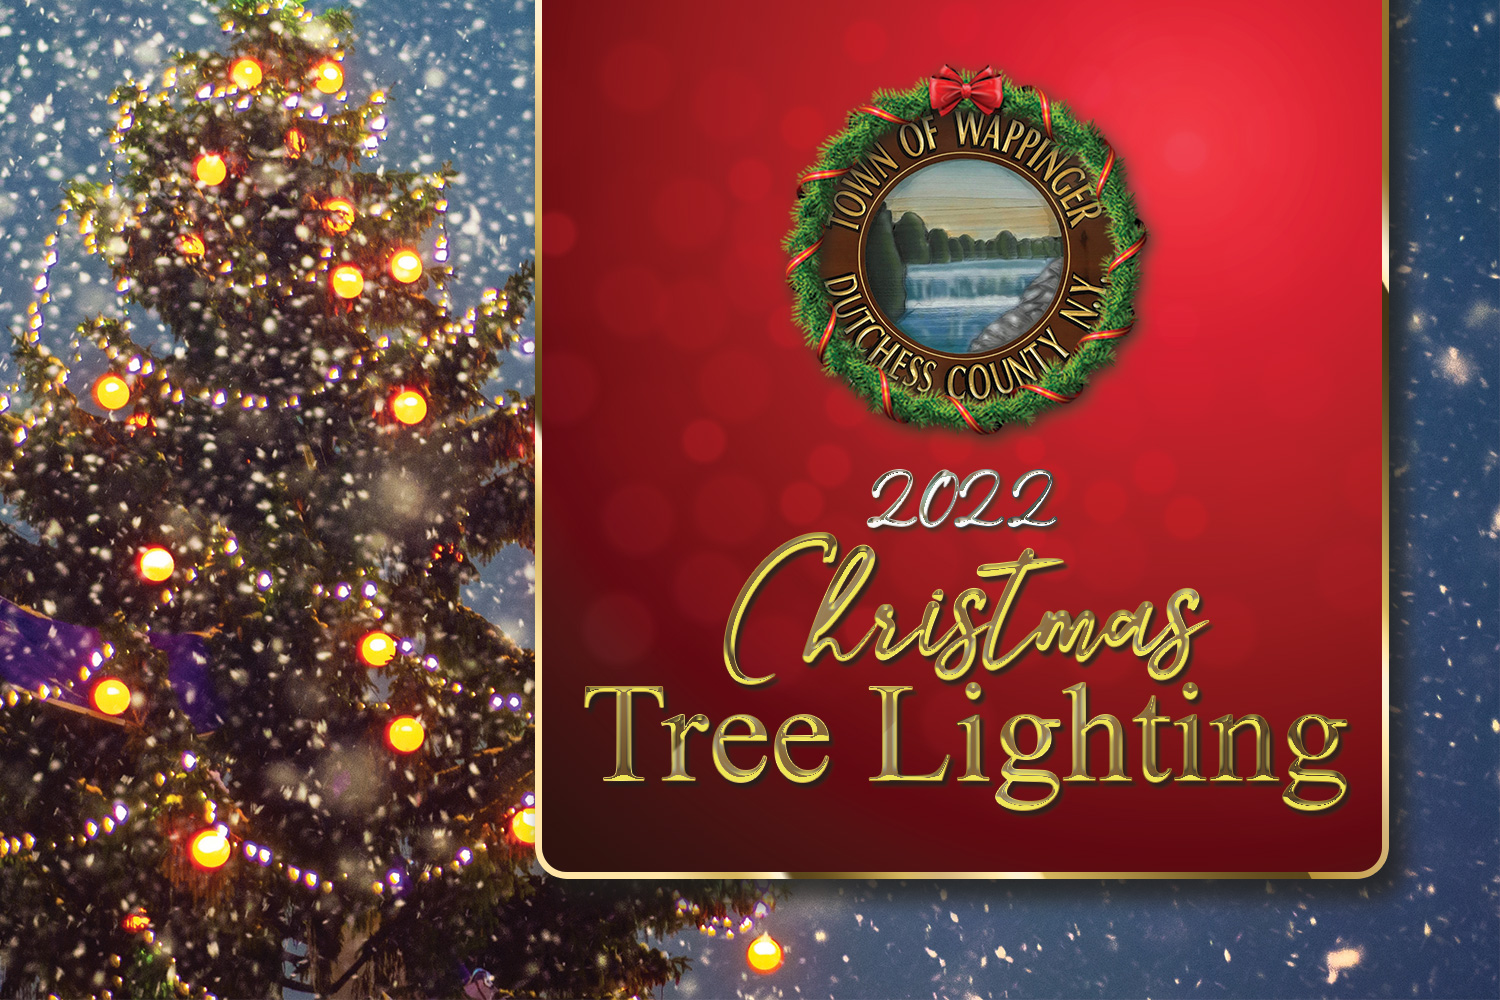 2022 Wappinger Tree Lighting Ceremony